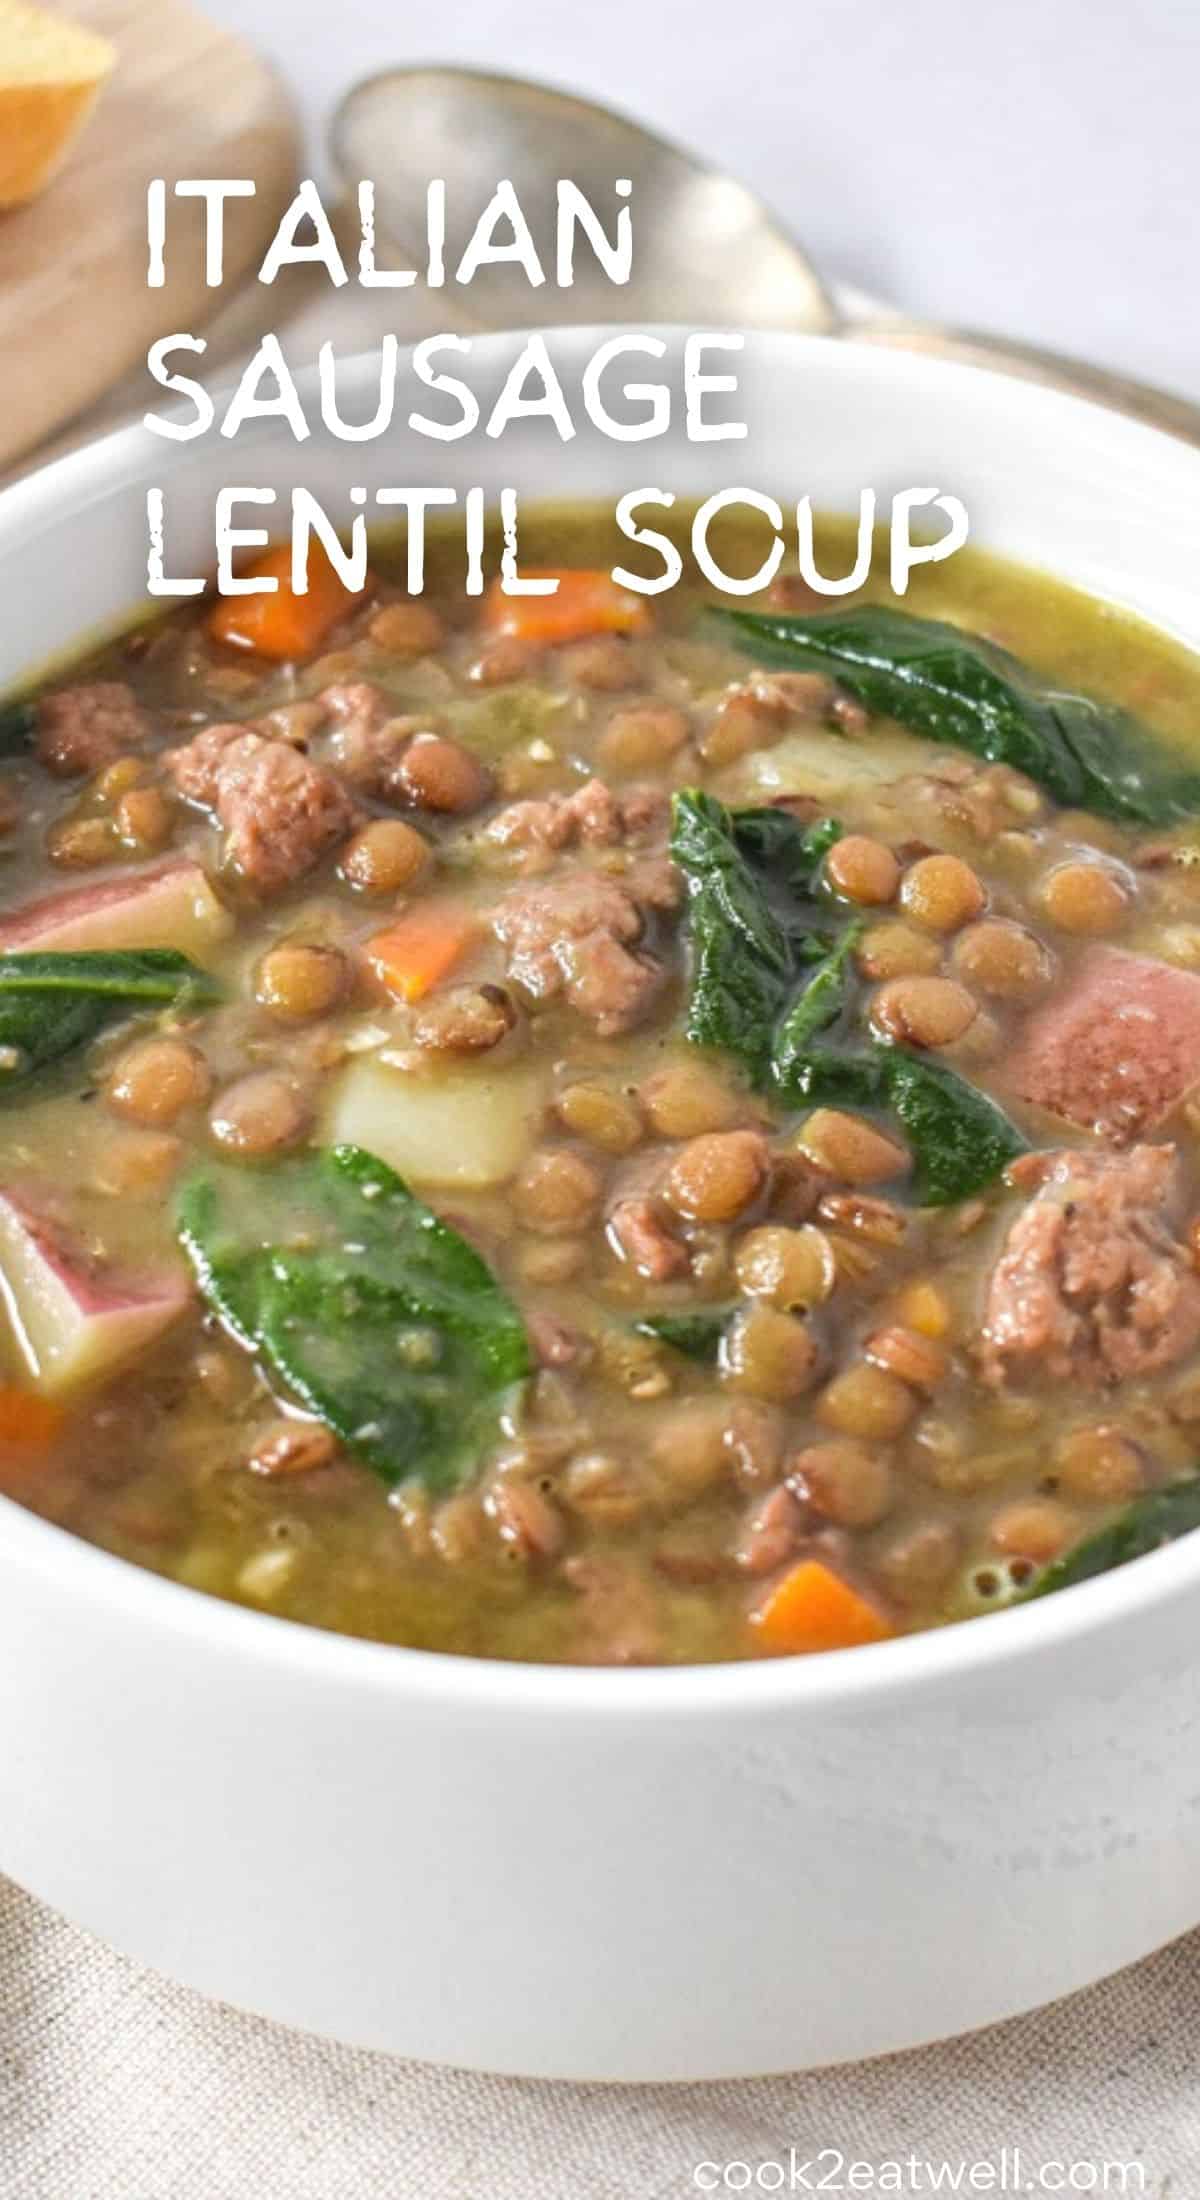 Italian Sausage Lentil Soup - Cook2eatwell